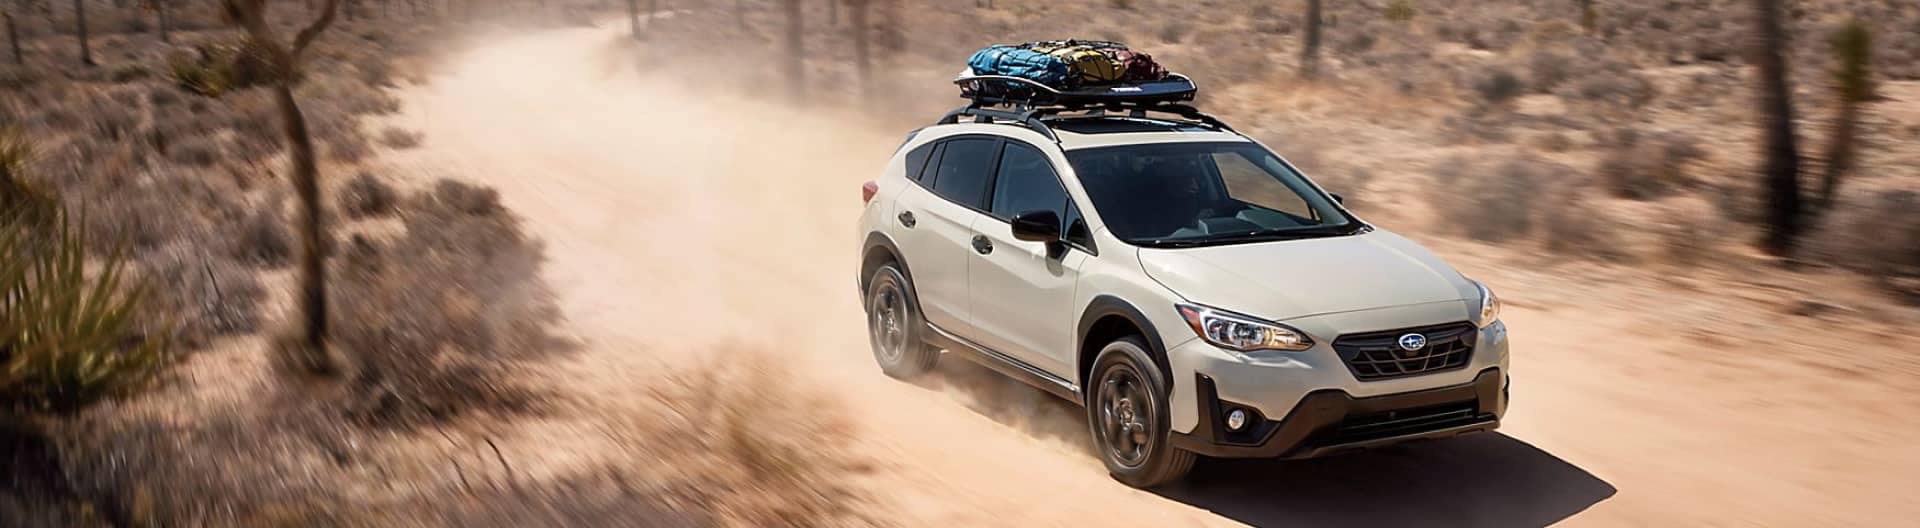 Subaru Crosstrek driving through the desert